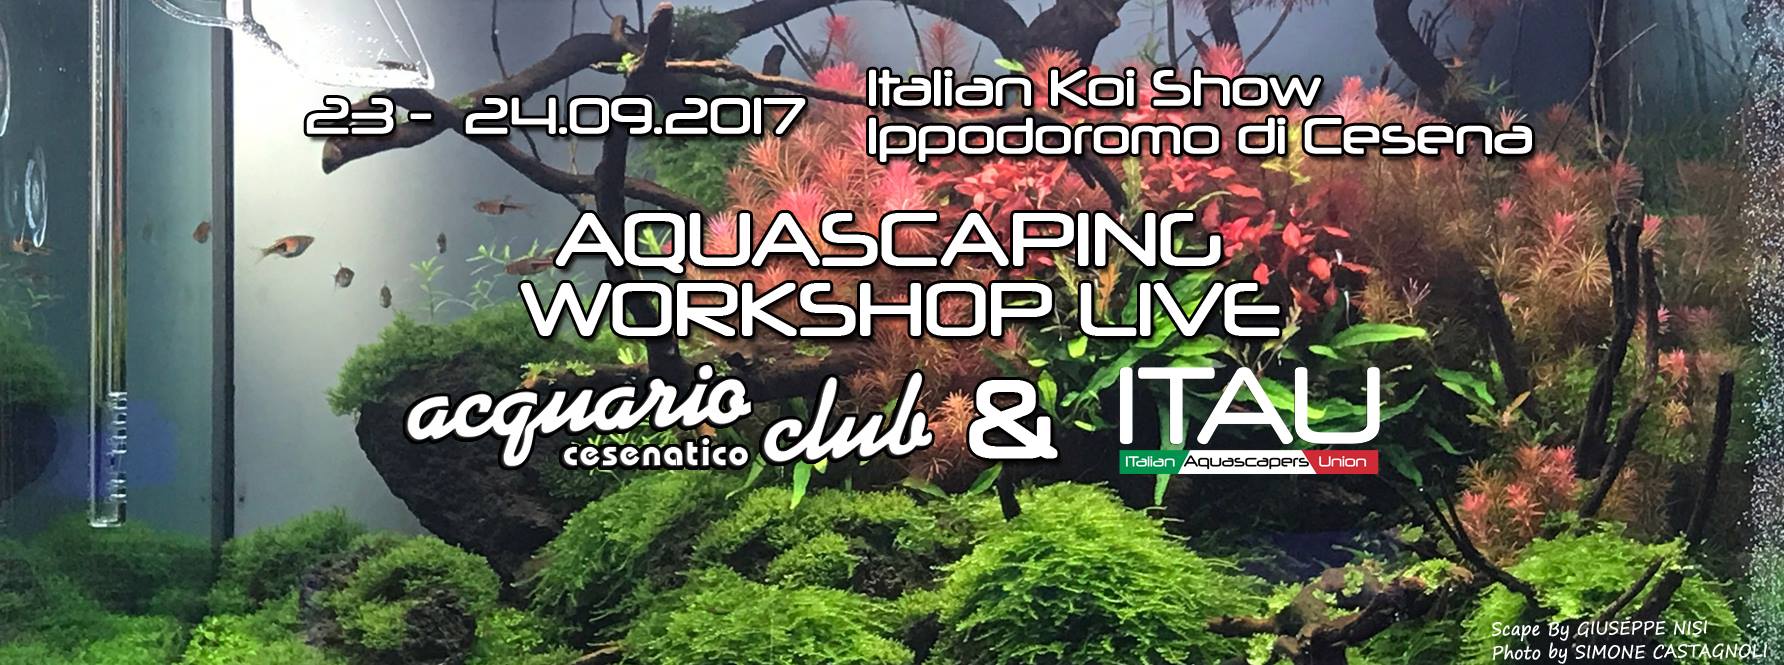 Aquascaping workshop live presso italian koi show 23 e 24 settembre 2017